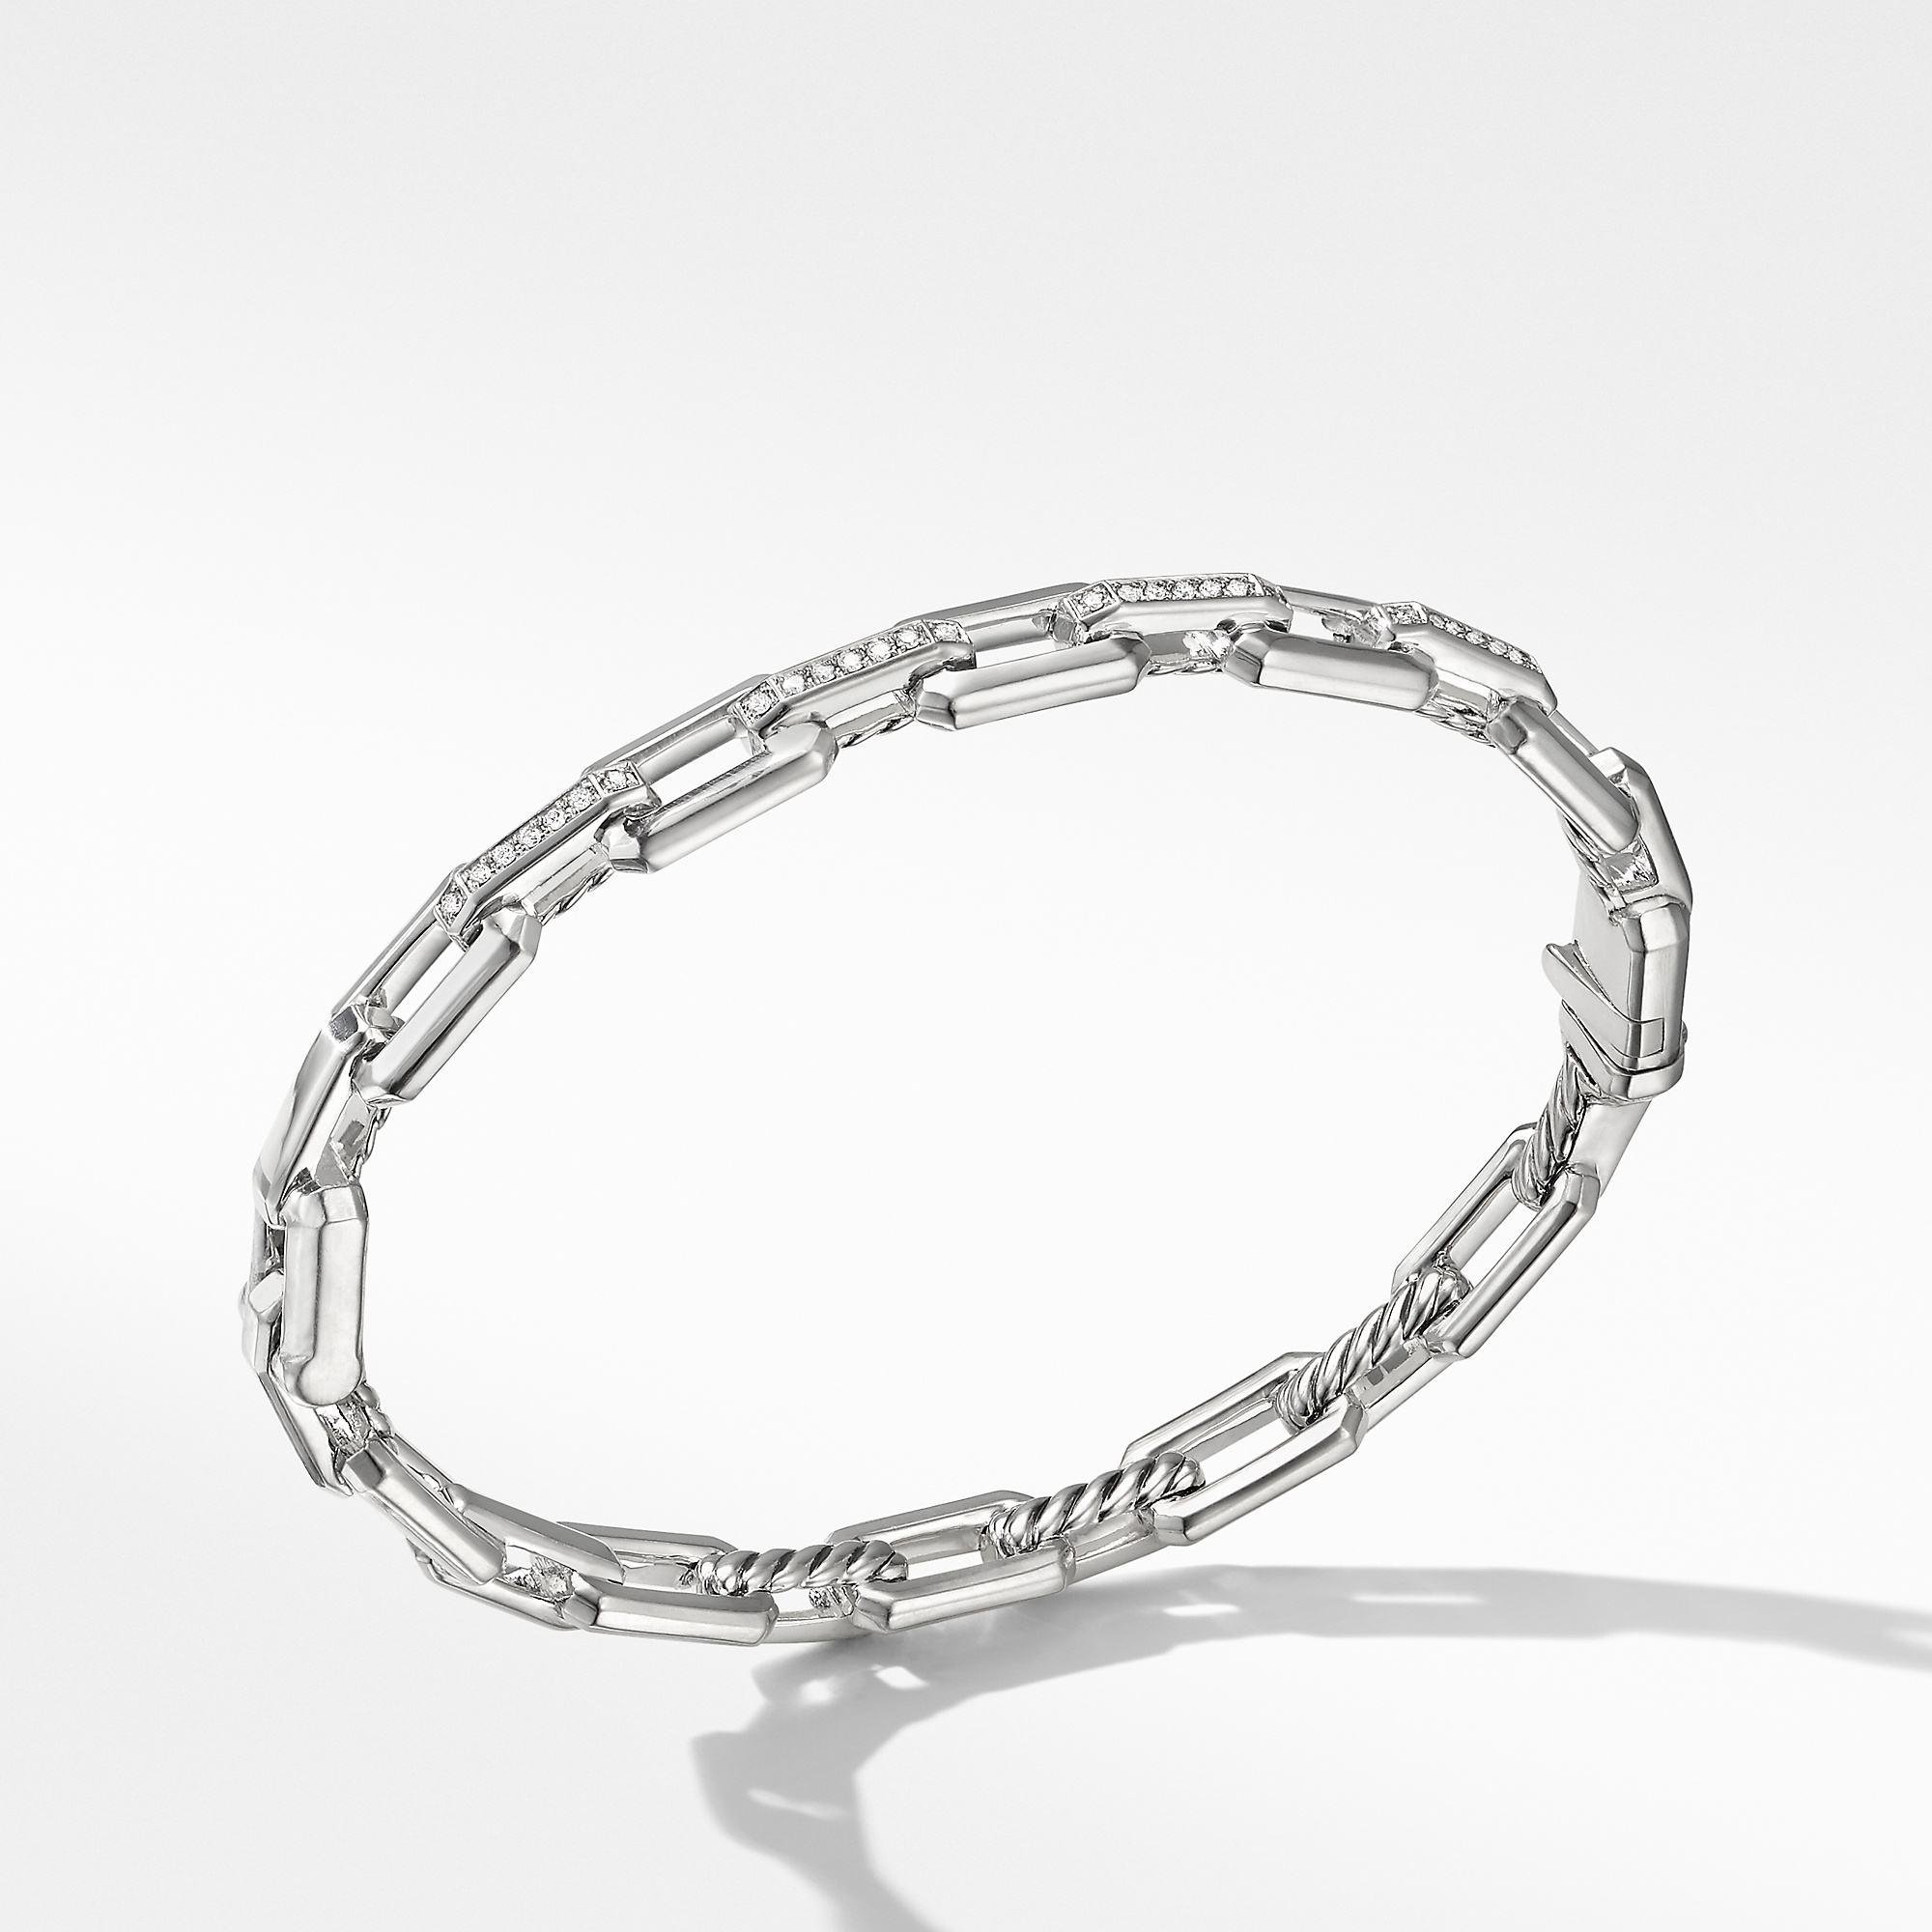 David Yurman Stax Link Bracelet in Sterling Silver with Diamonds, size medium